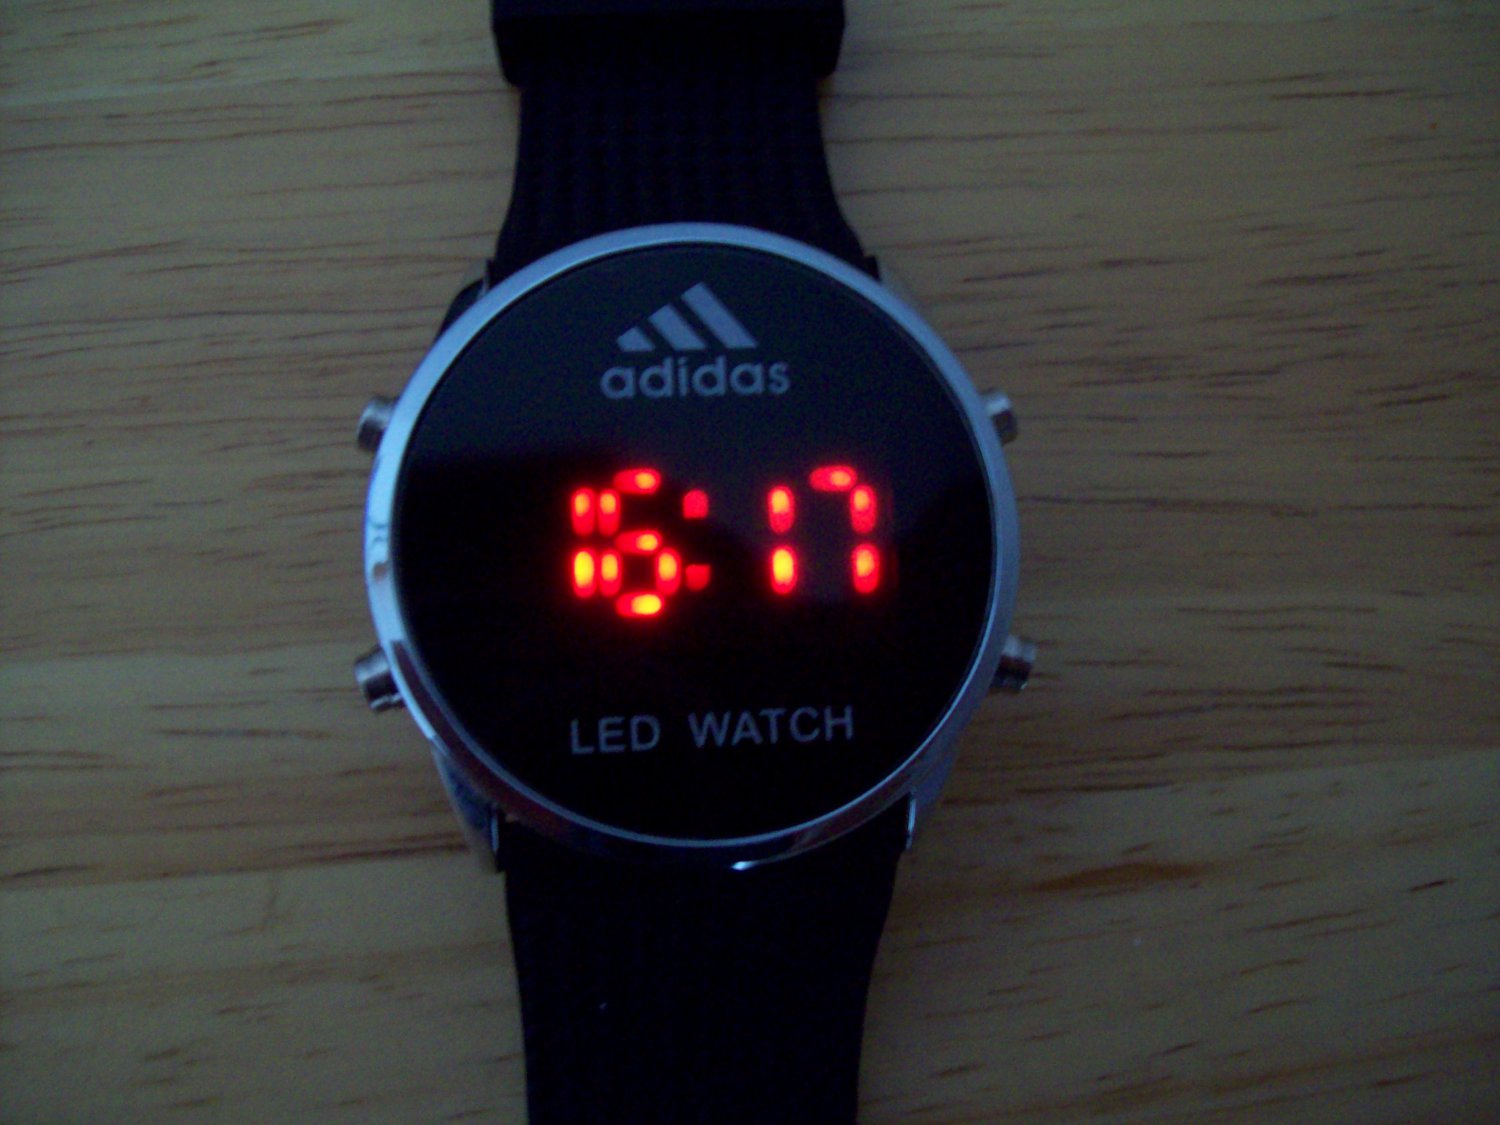 Настройки часов led. Адидас лед вотч часы. Часы adidas h1416. Часы адидас k8943. Часы адидас led watch круглые.